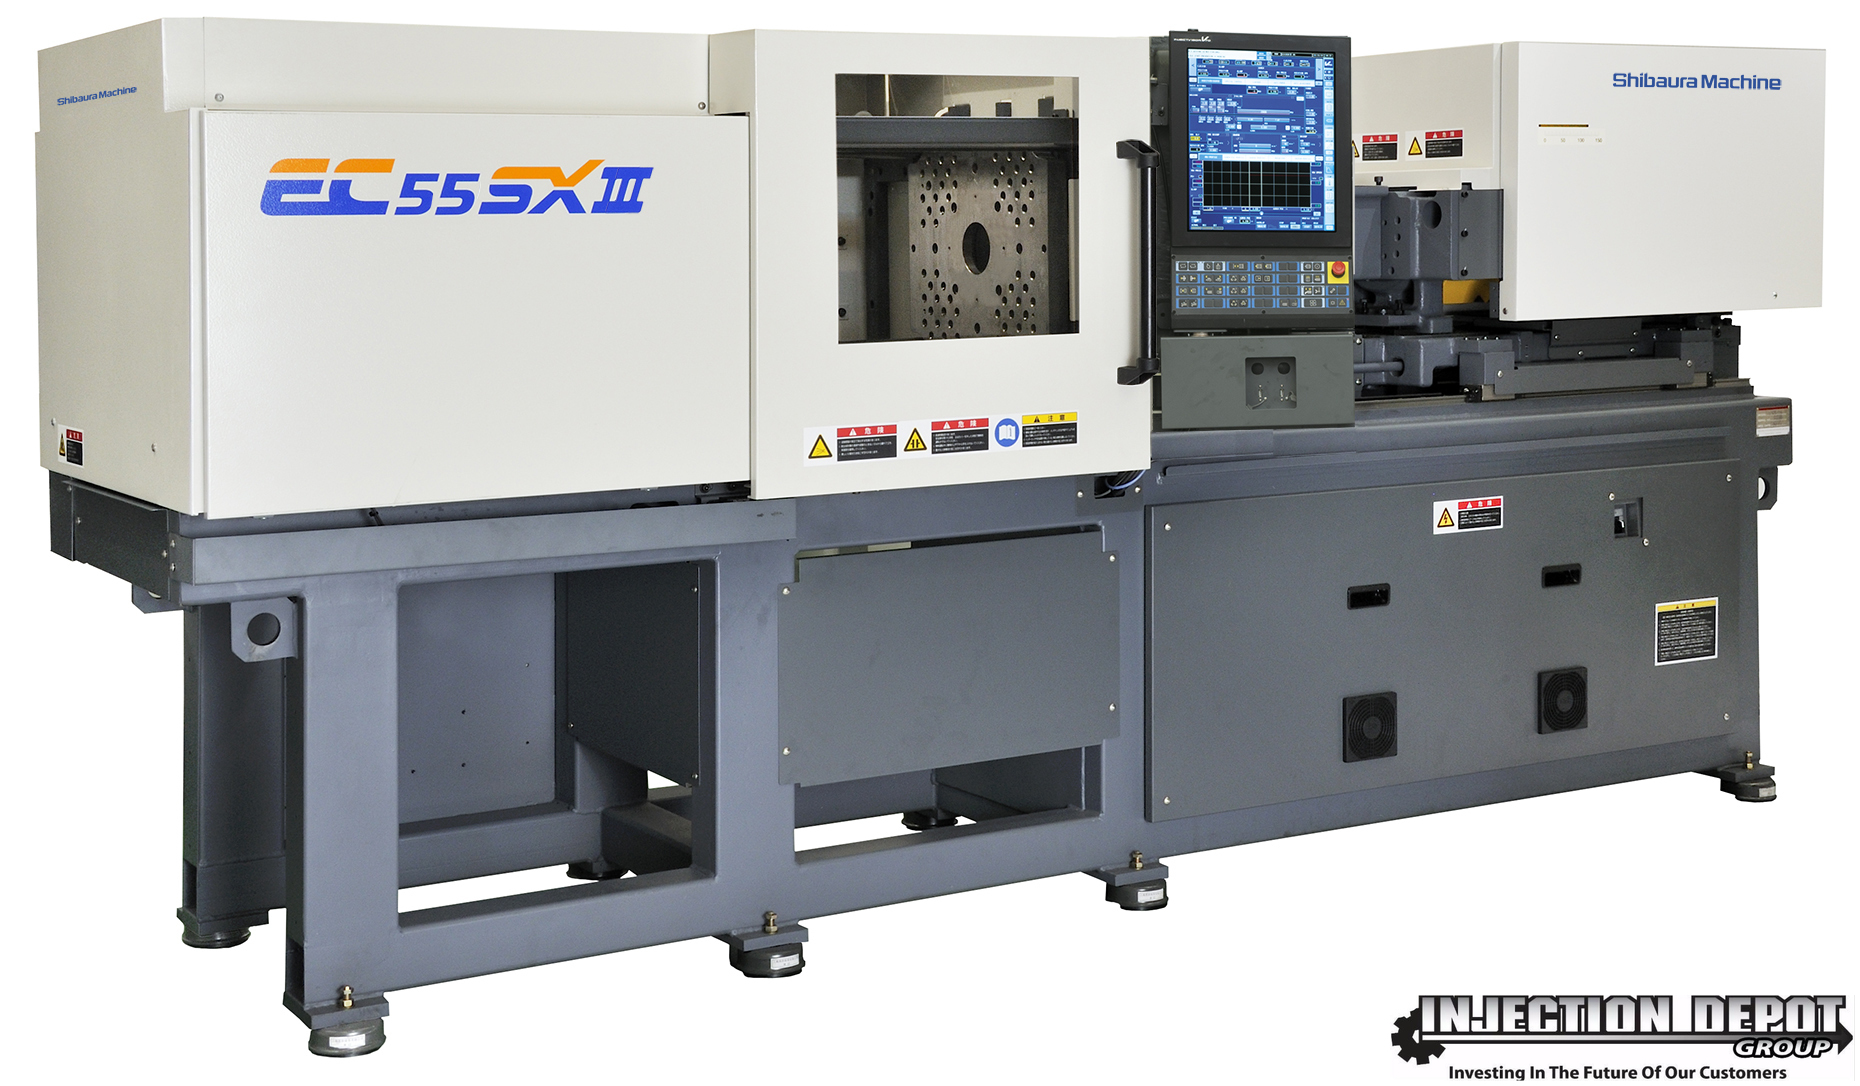 Shibaura Machine EC55SXIIIV70-U1.5 1Y Horizontal Injection Moulding Machines | INJECTION DEPOT GROUP